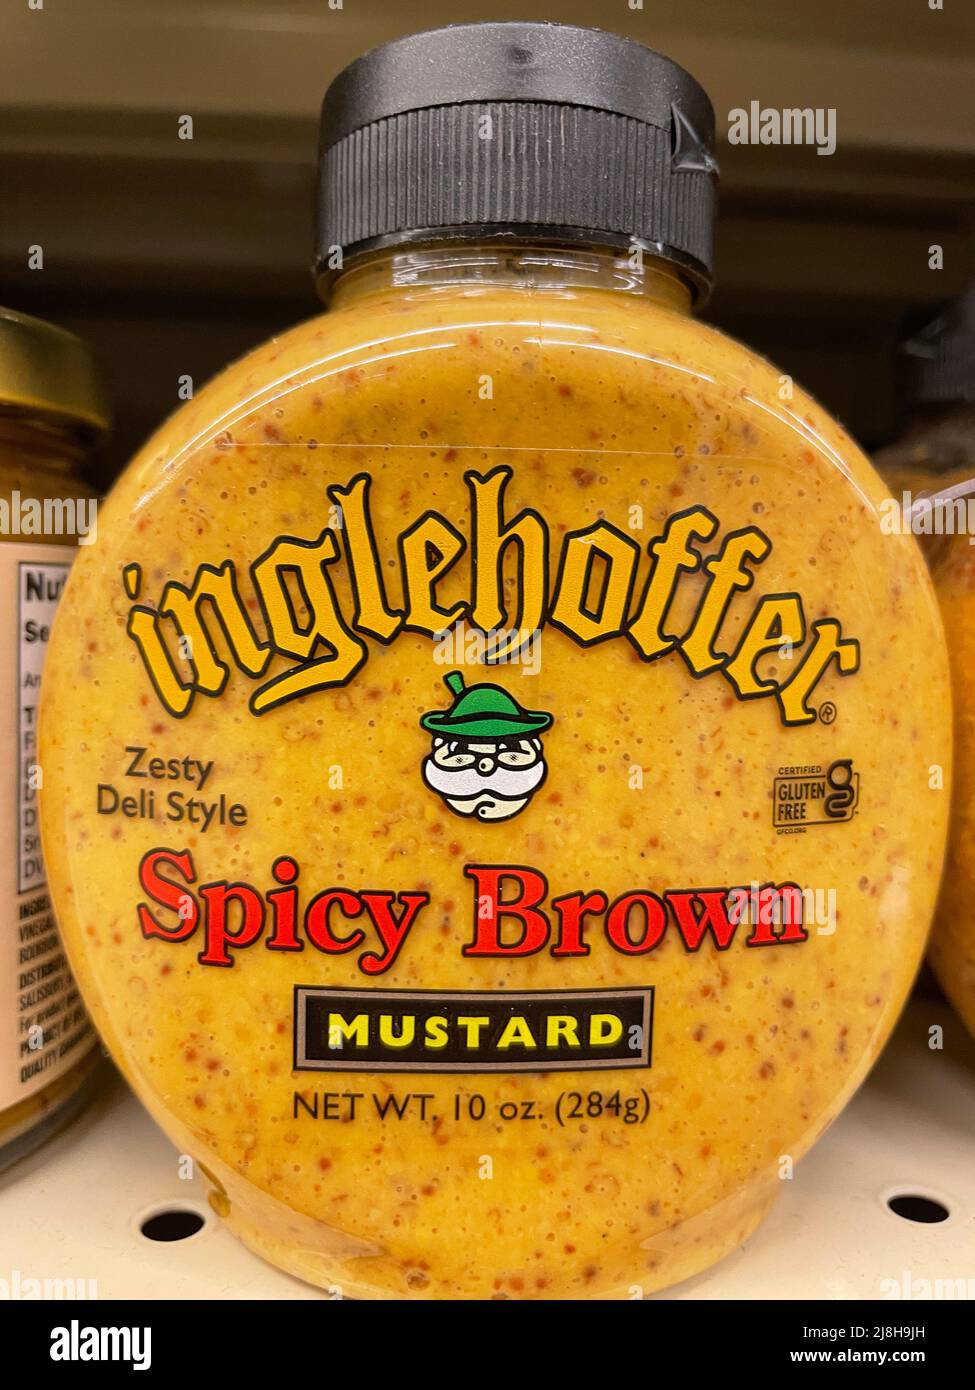 https://c8.alamy.com/comp/2J8H9JH/grovetown-ga-usa-12-15-21-retail-store-condiments-inglehoffer-spicy-brown-mustard-2J8H9JH.jpg